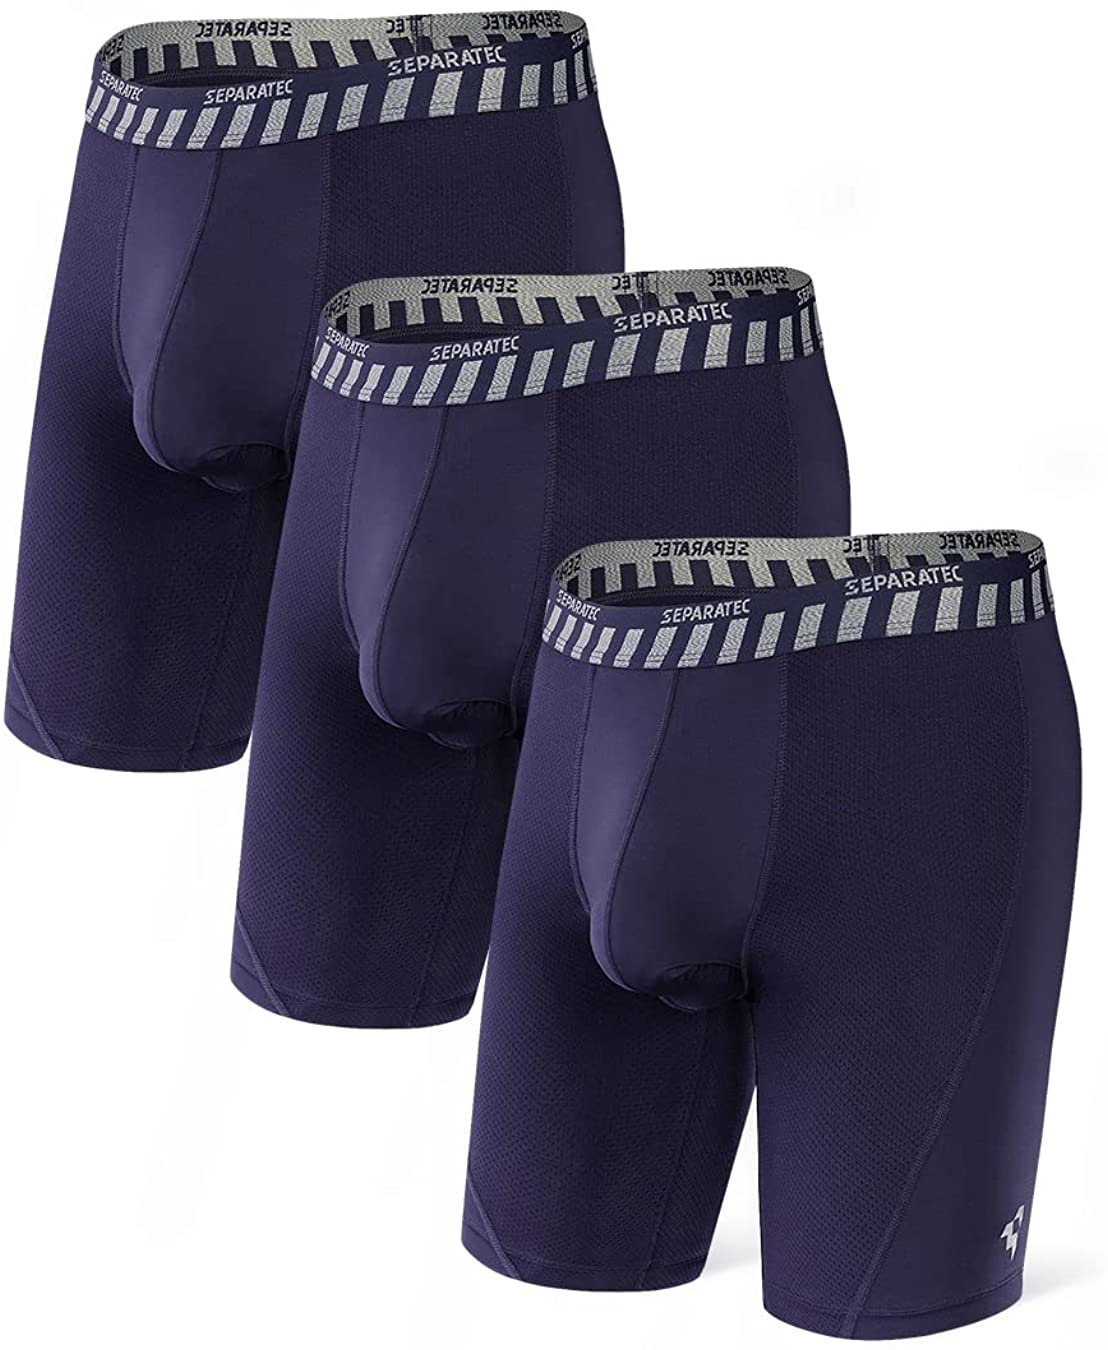 Separatec Men's Dual Pouch Underwear Lightweight Sport Quick Dry  Performance Box